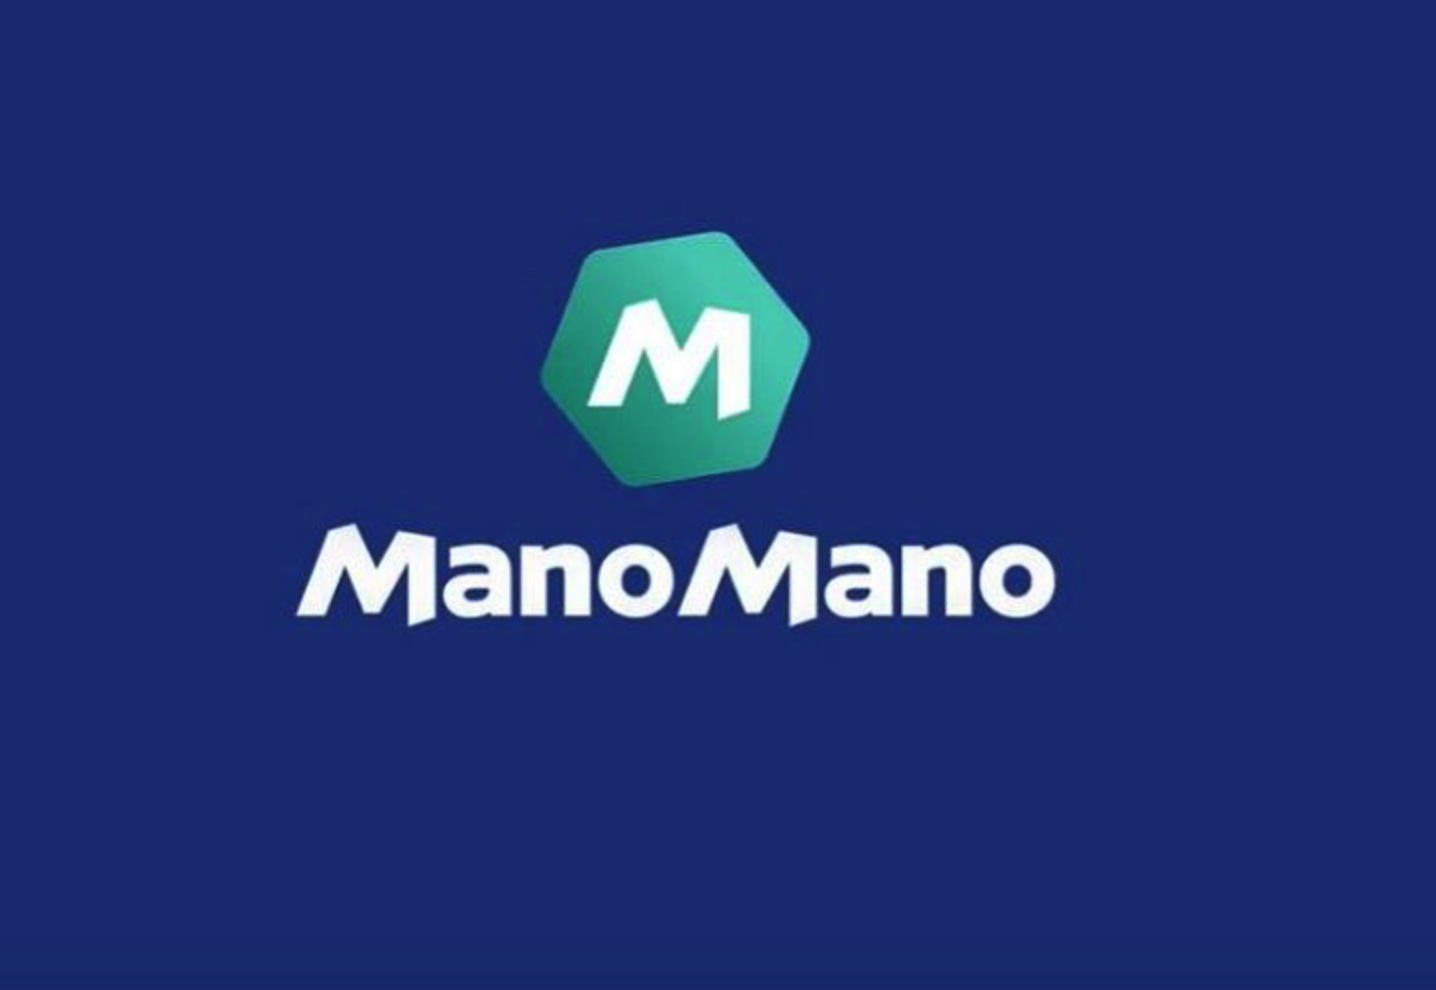 ManoMano’s latest round of fundraising achieves €125m